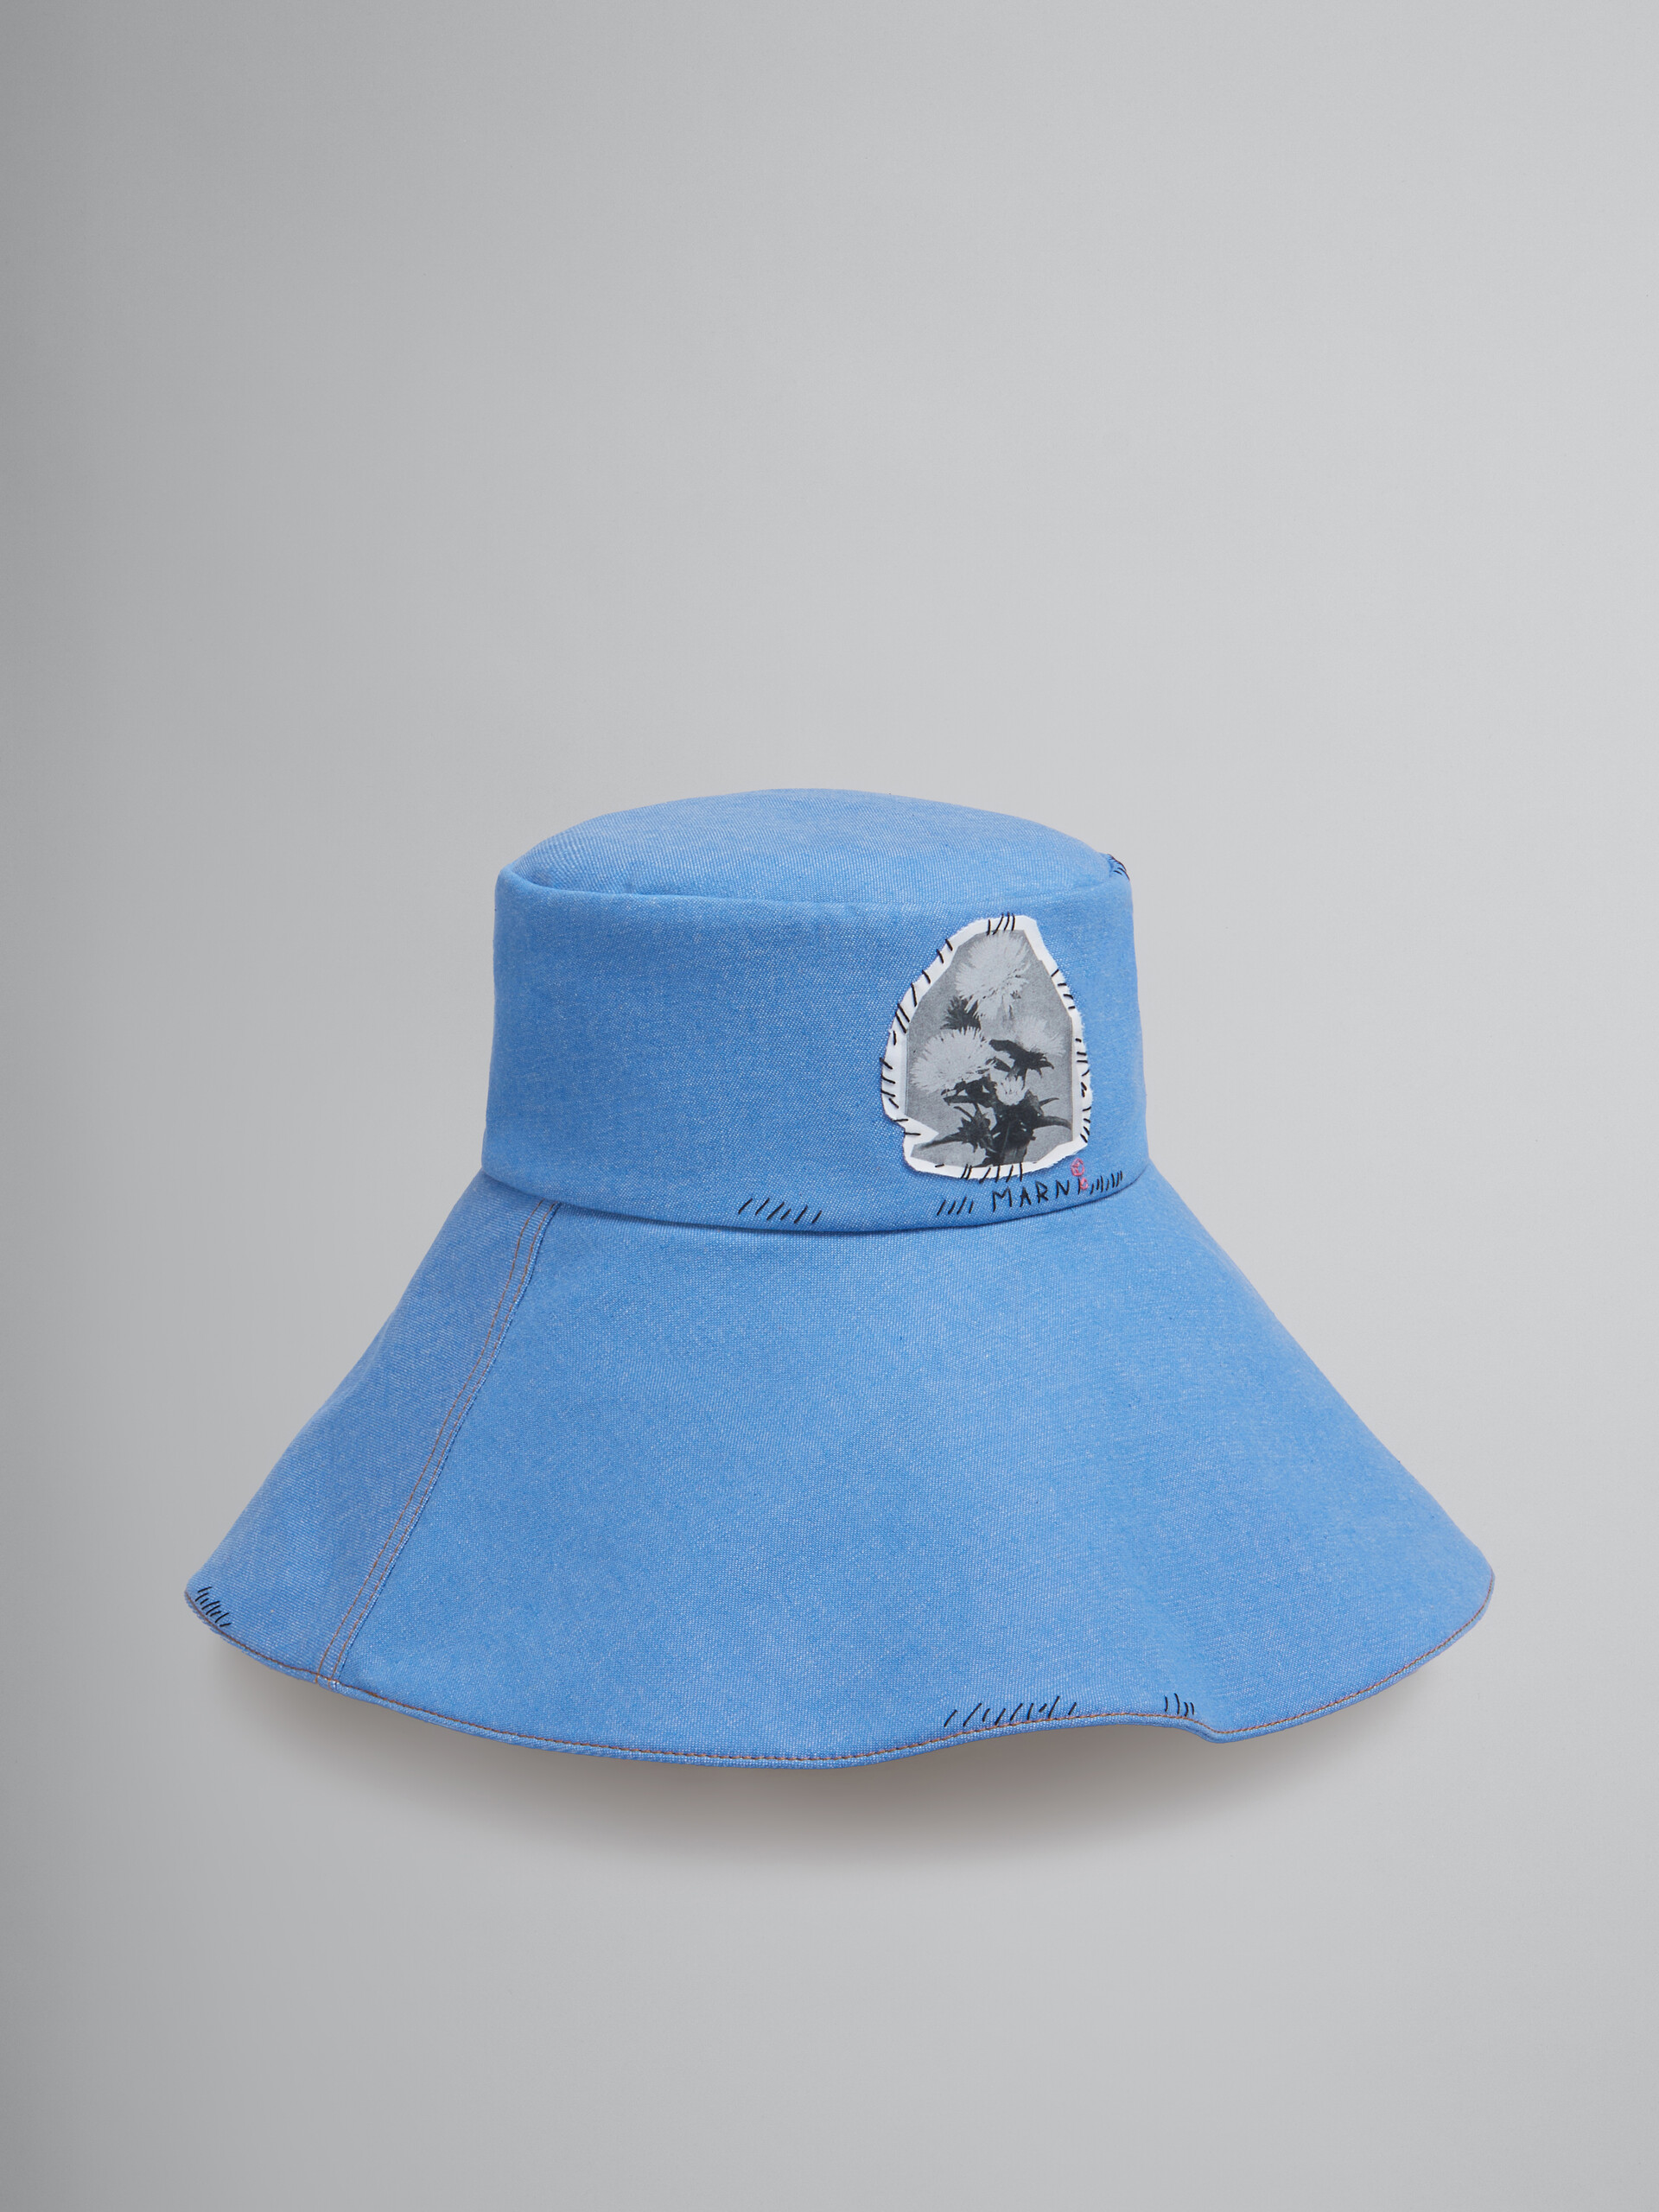 Cappello bucket in denim blu con impunture Marni - Cappelli - Image 1